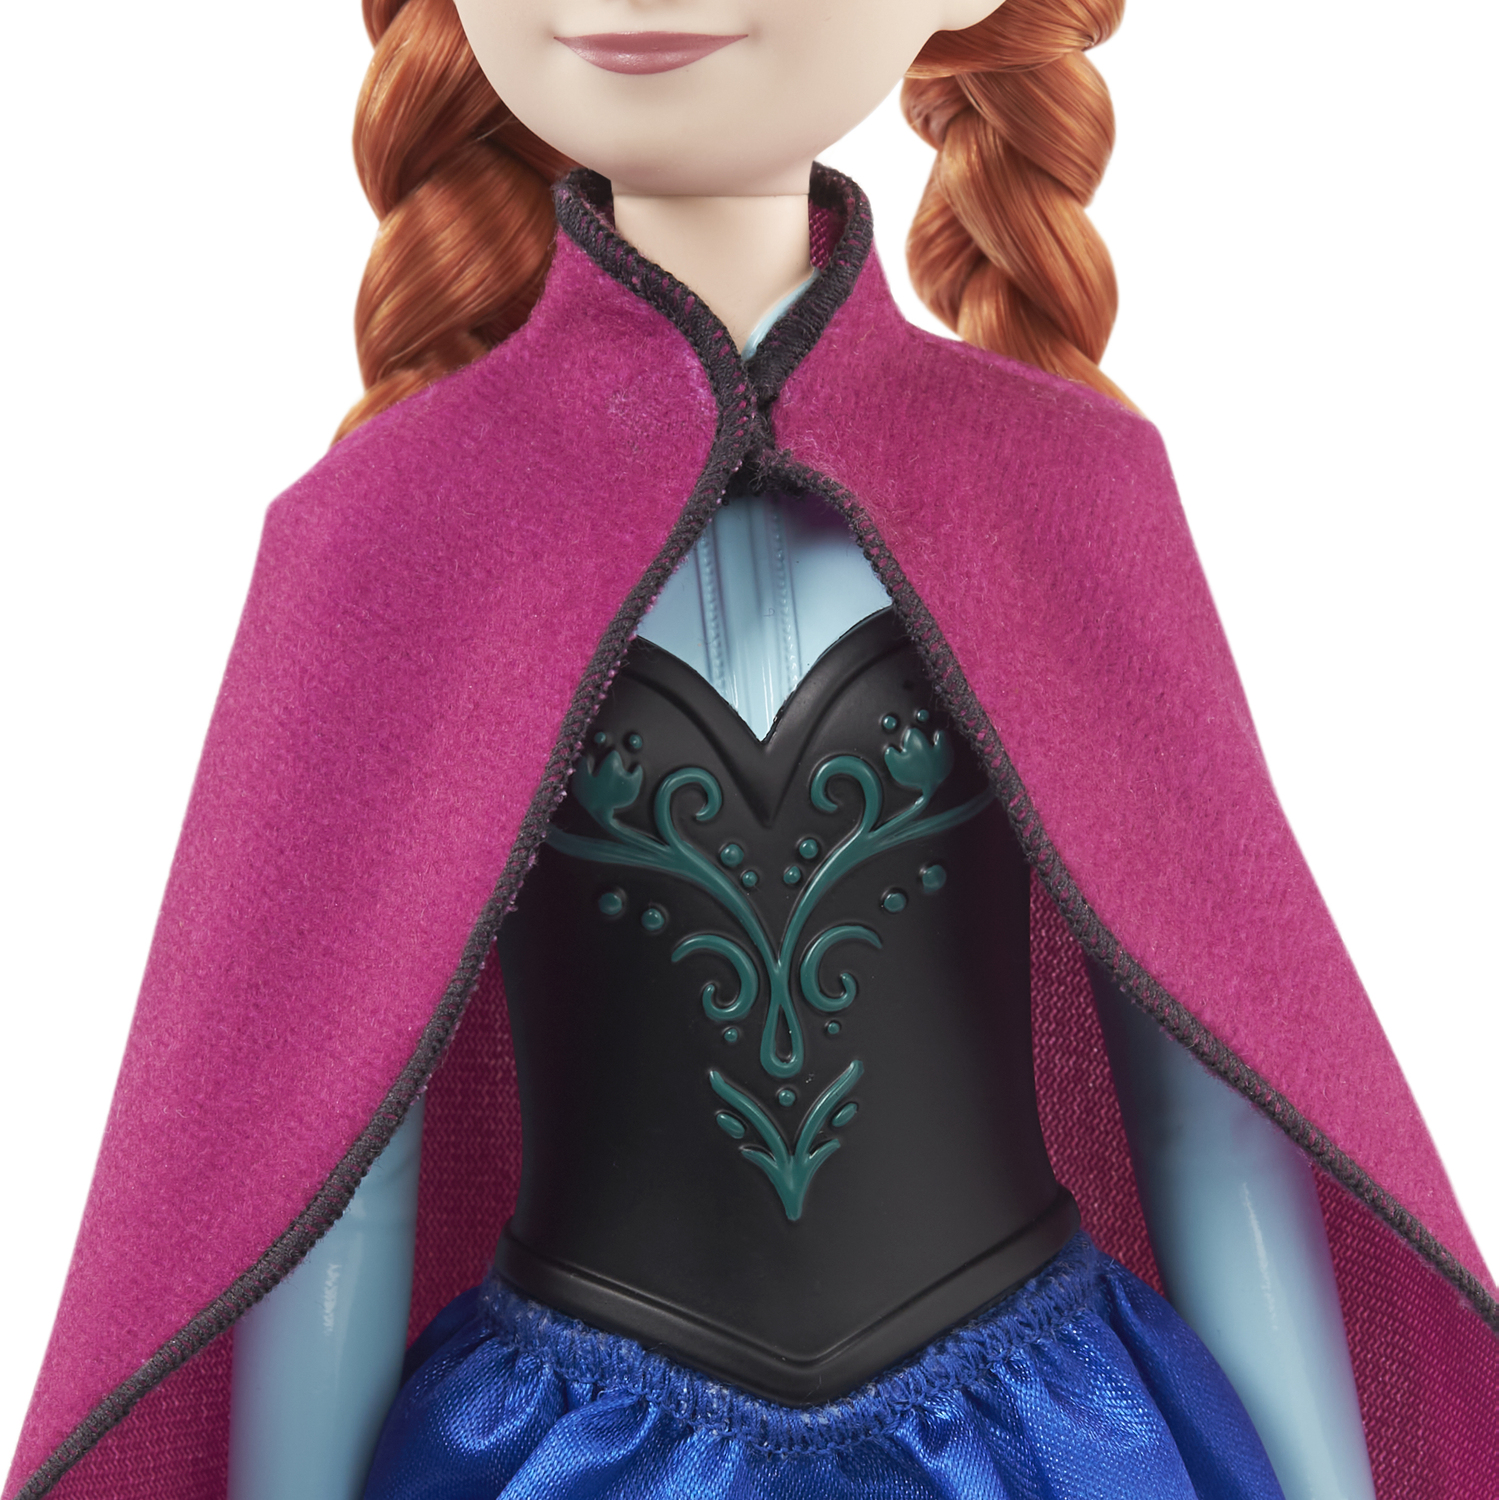 Disney Frost Anna